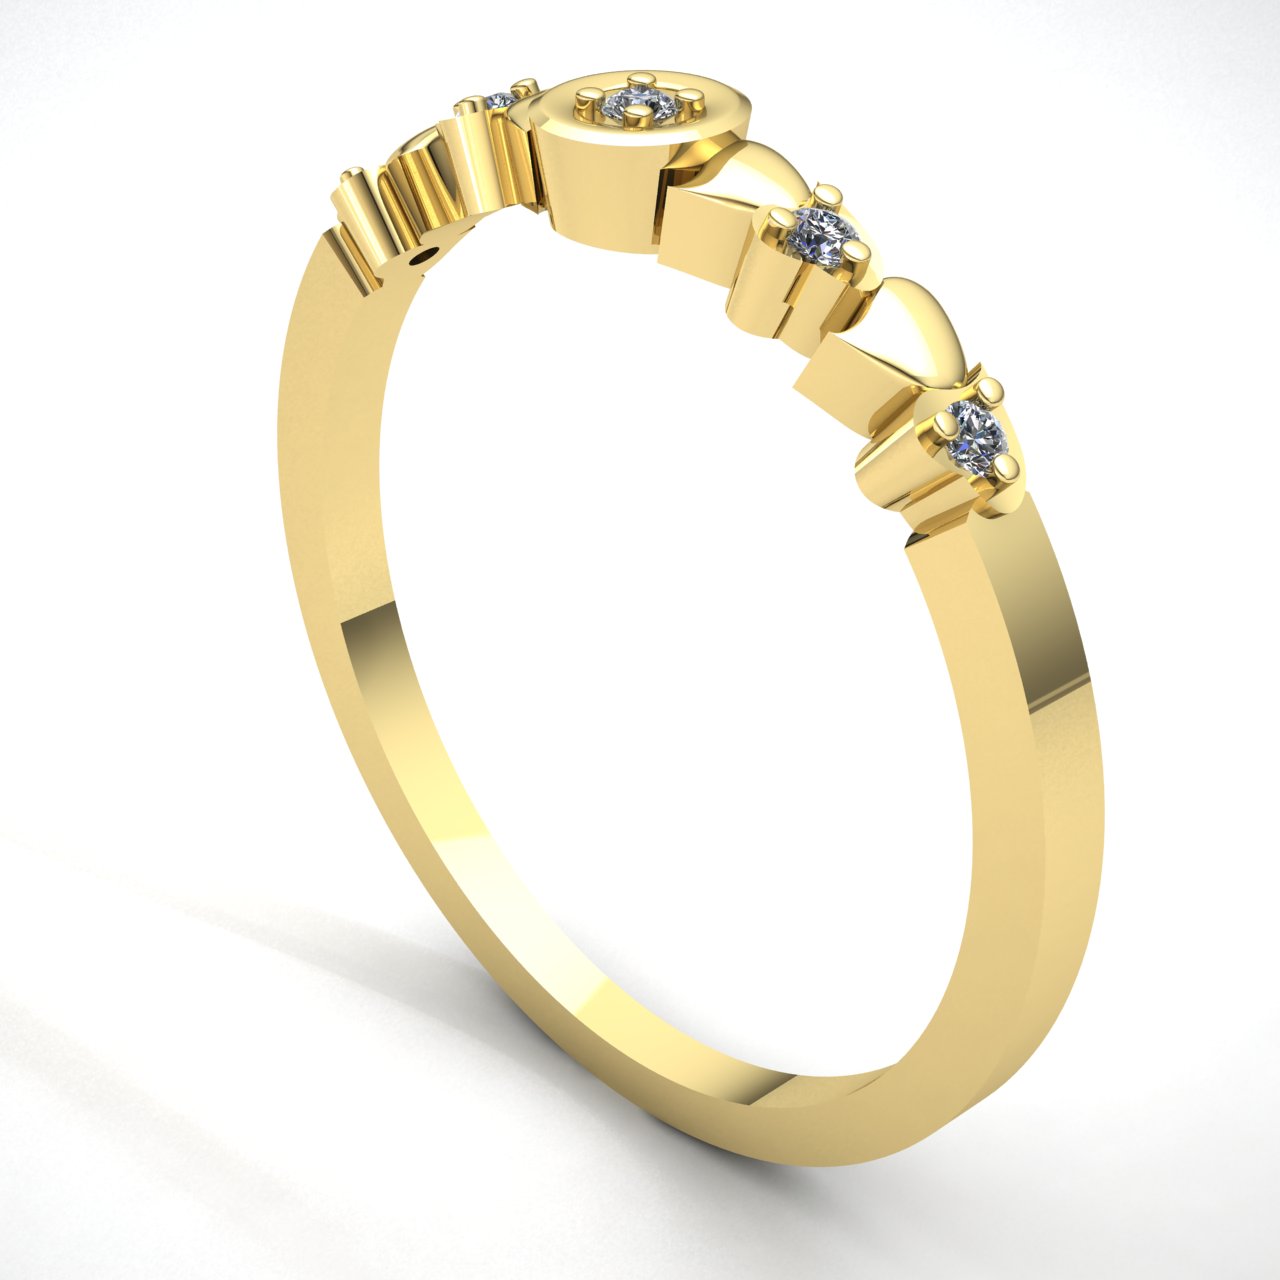 Details about   Genuine 0.25ct Round Diamond Ladies Stackable Anniversary Wedding Band 14K Gold 